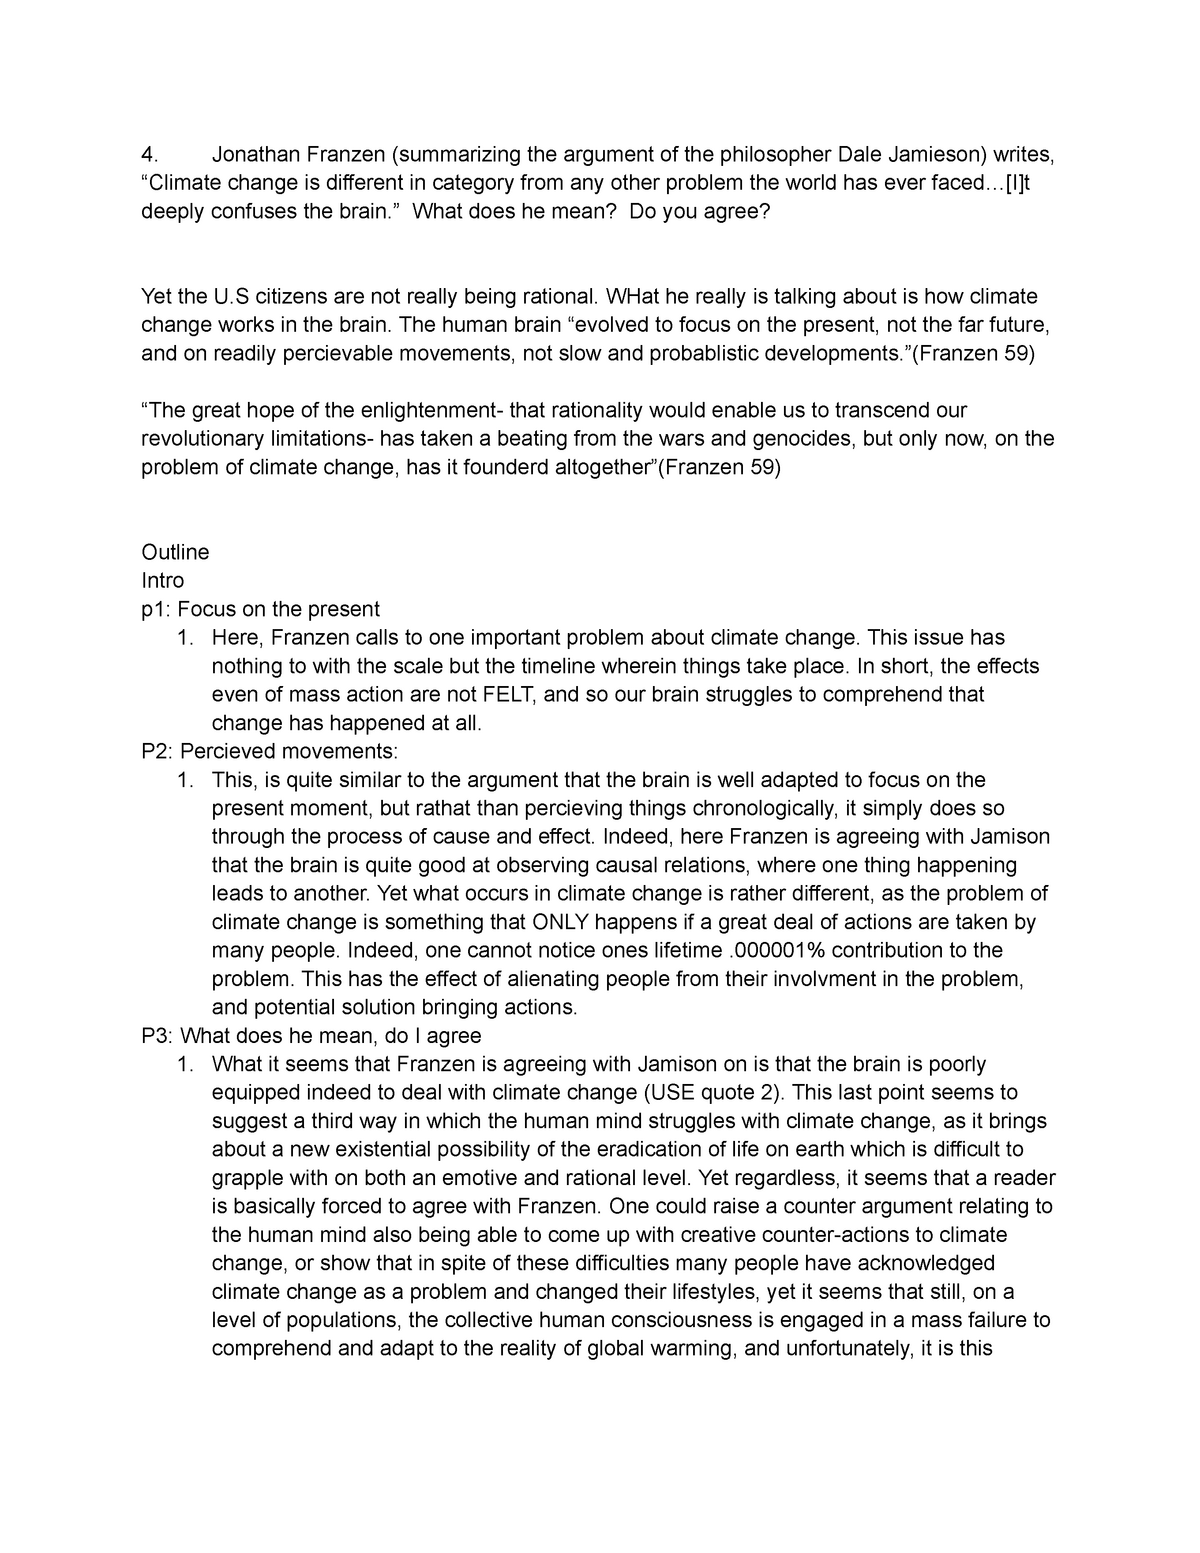 jonathan franzen essays pdf